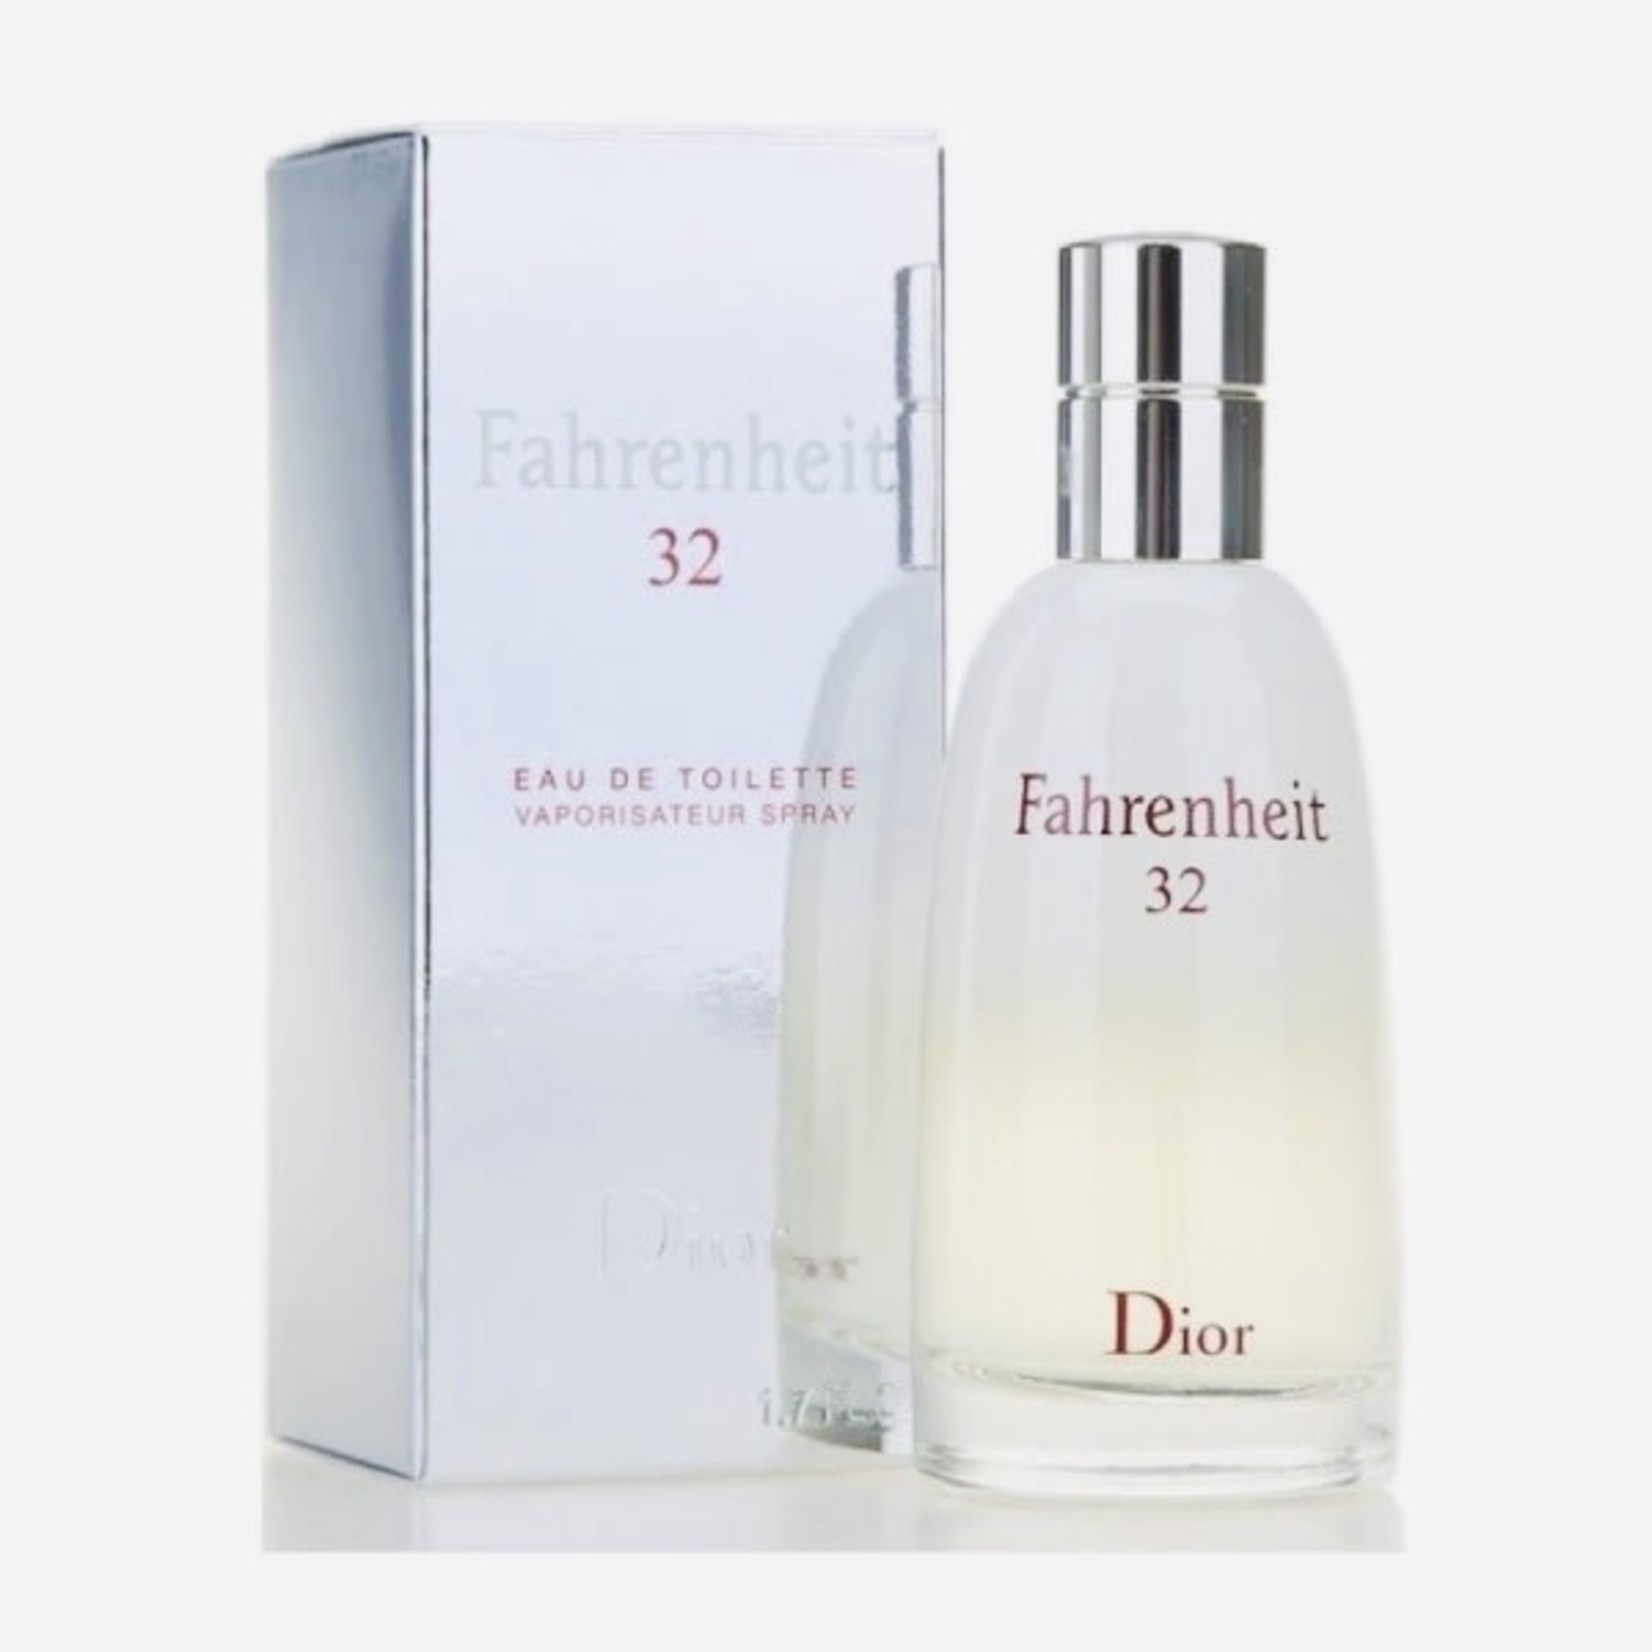 Christian Dior Fahrenheit 32 - Eau de Toilette